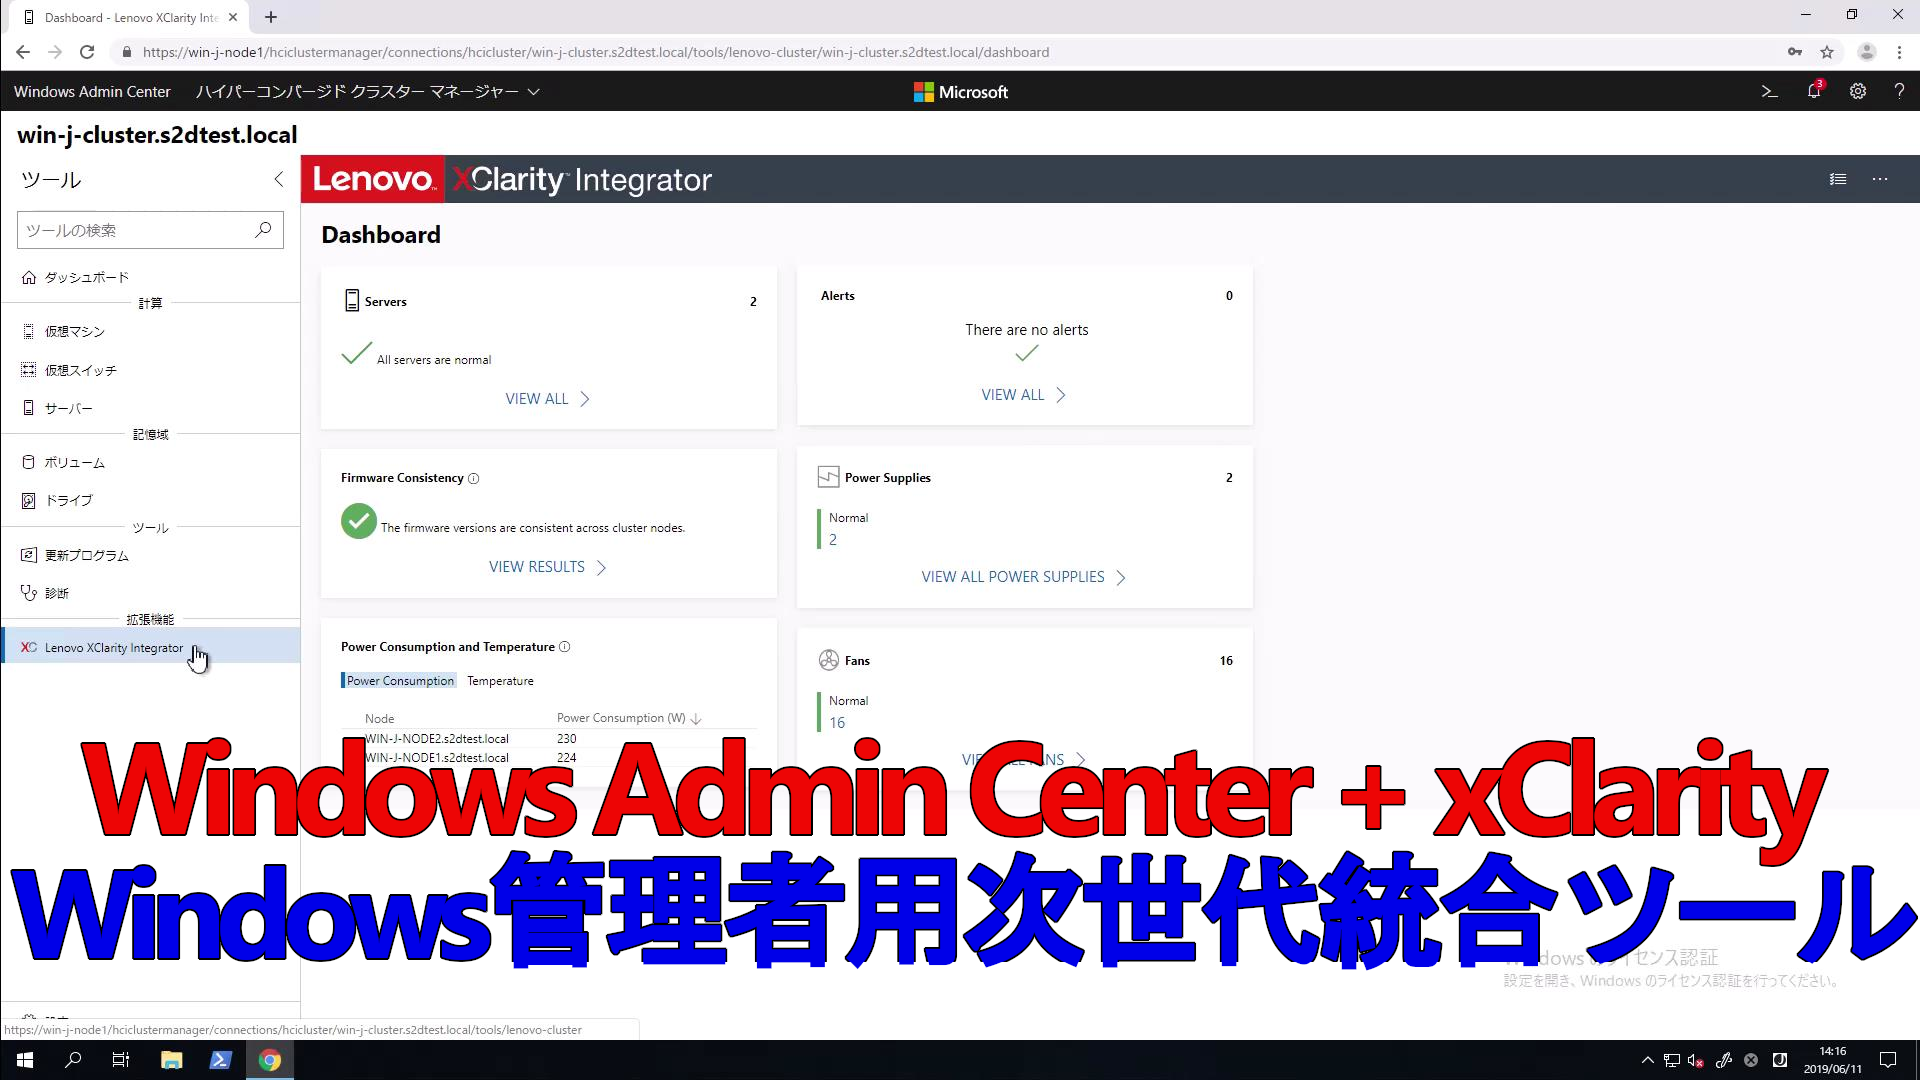 Windows Admin Center概要とXClarityとの連携